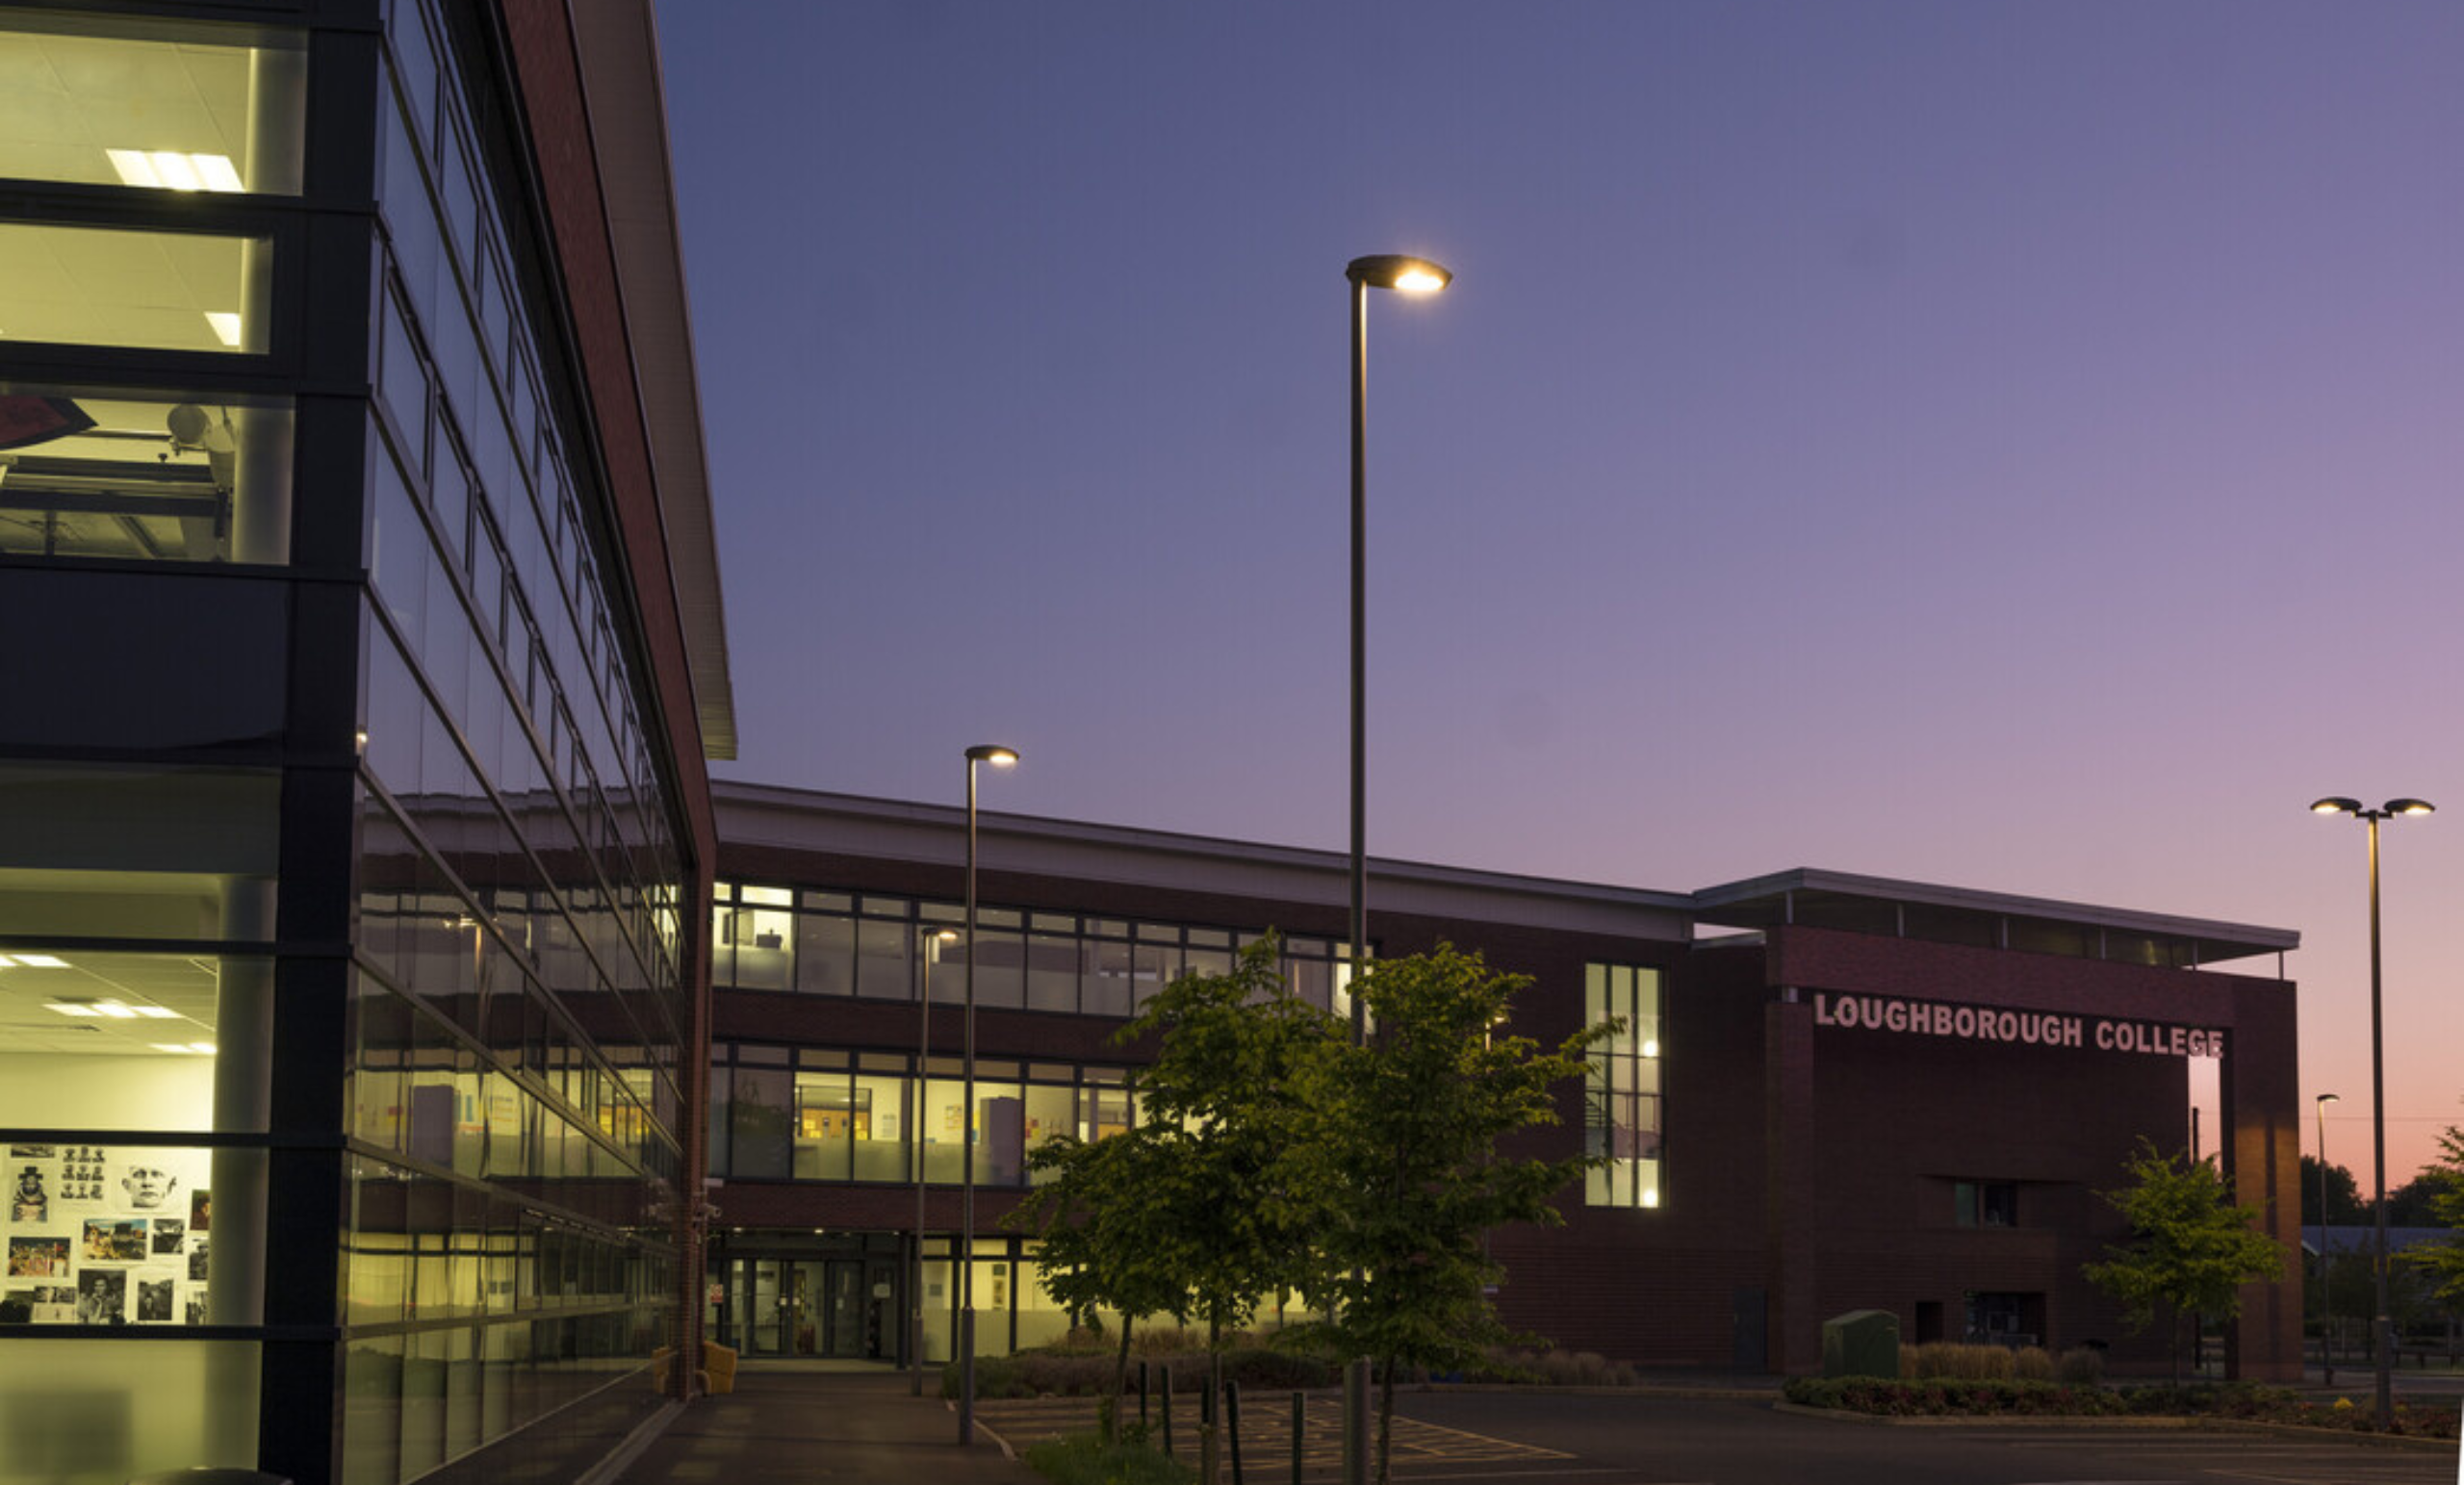 Loughborough College at night